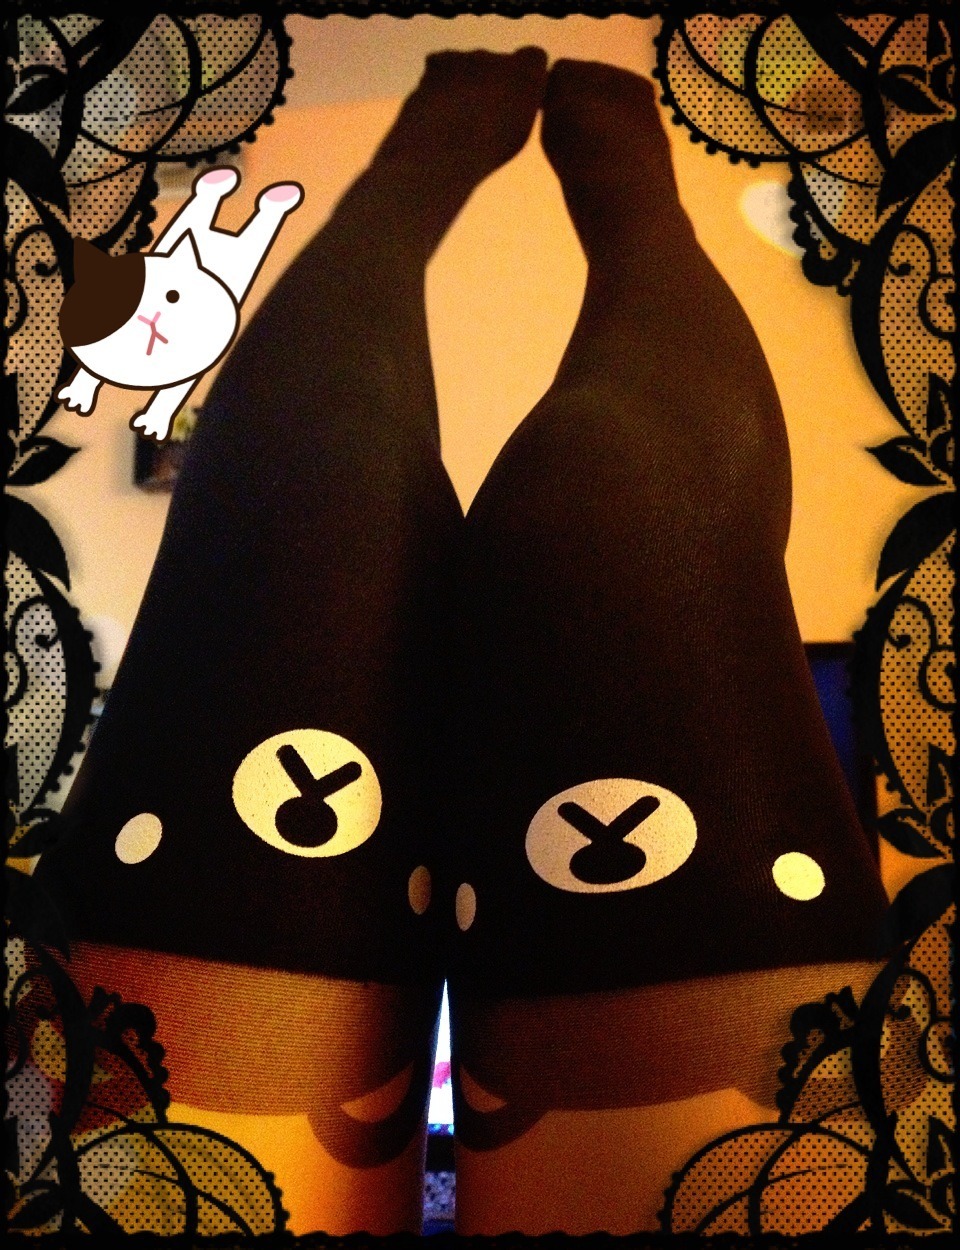 cute new tights (๑¯ω¯๑)✧